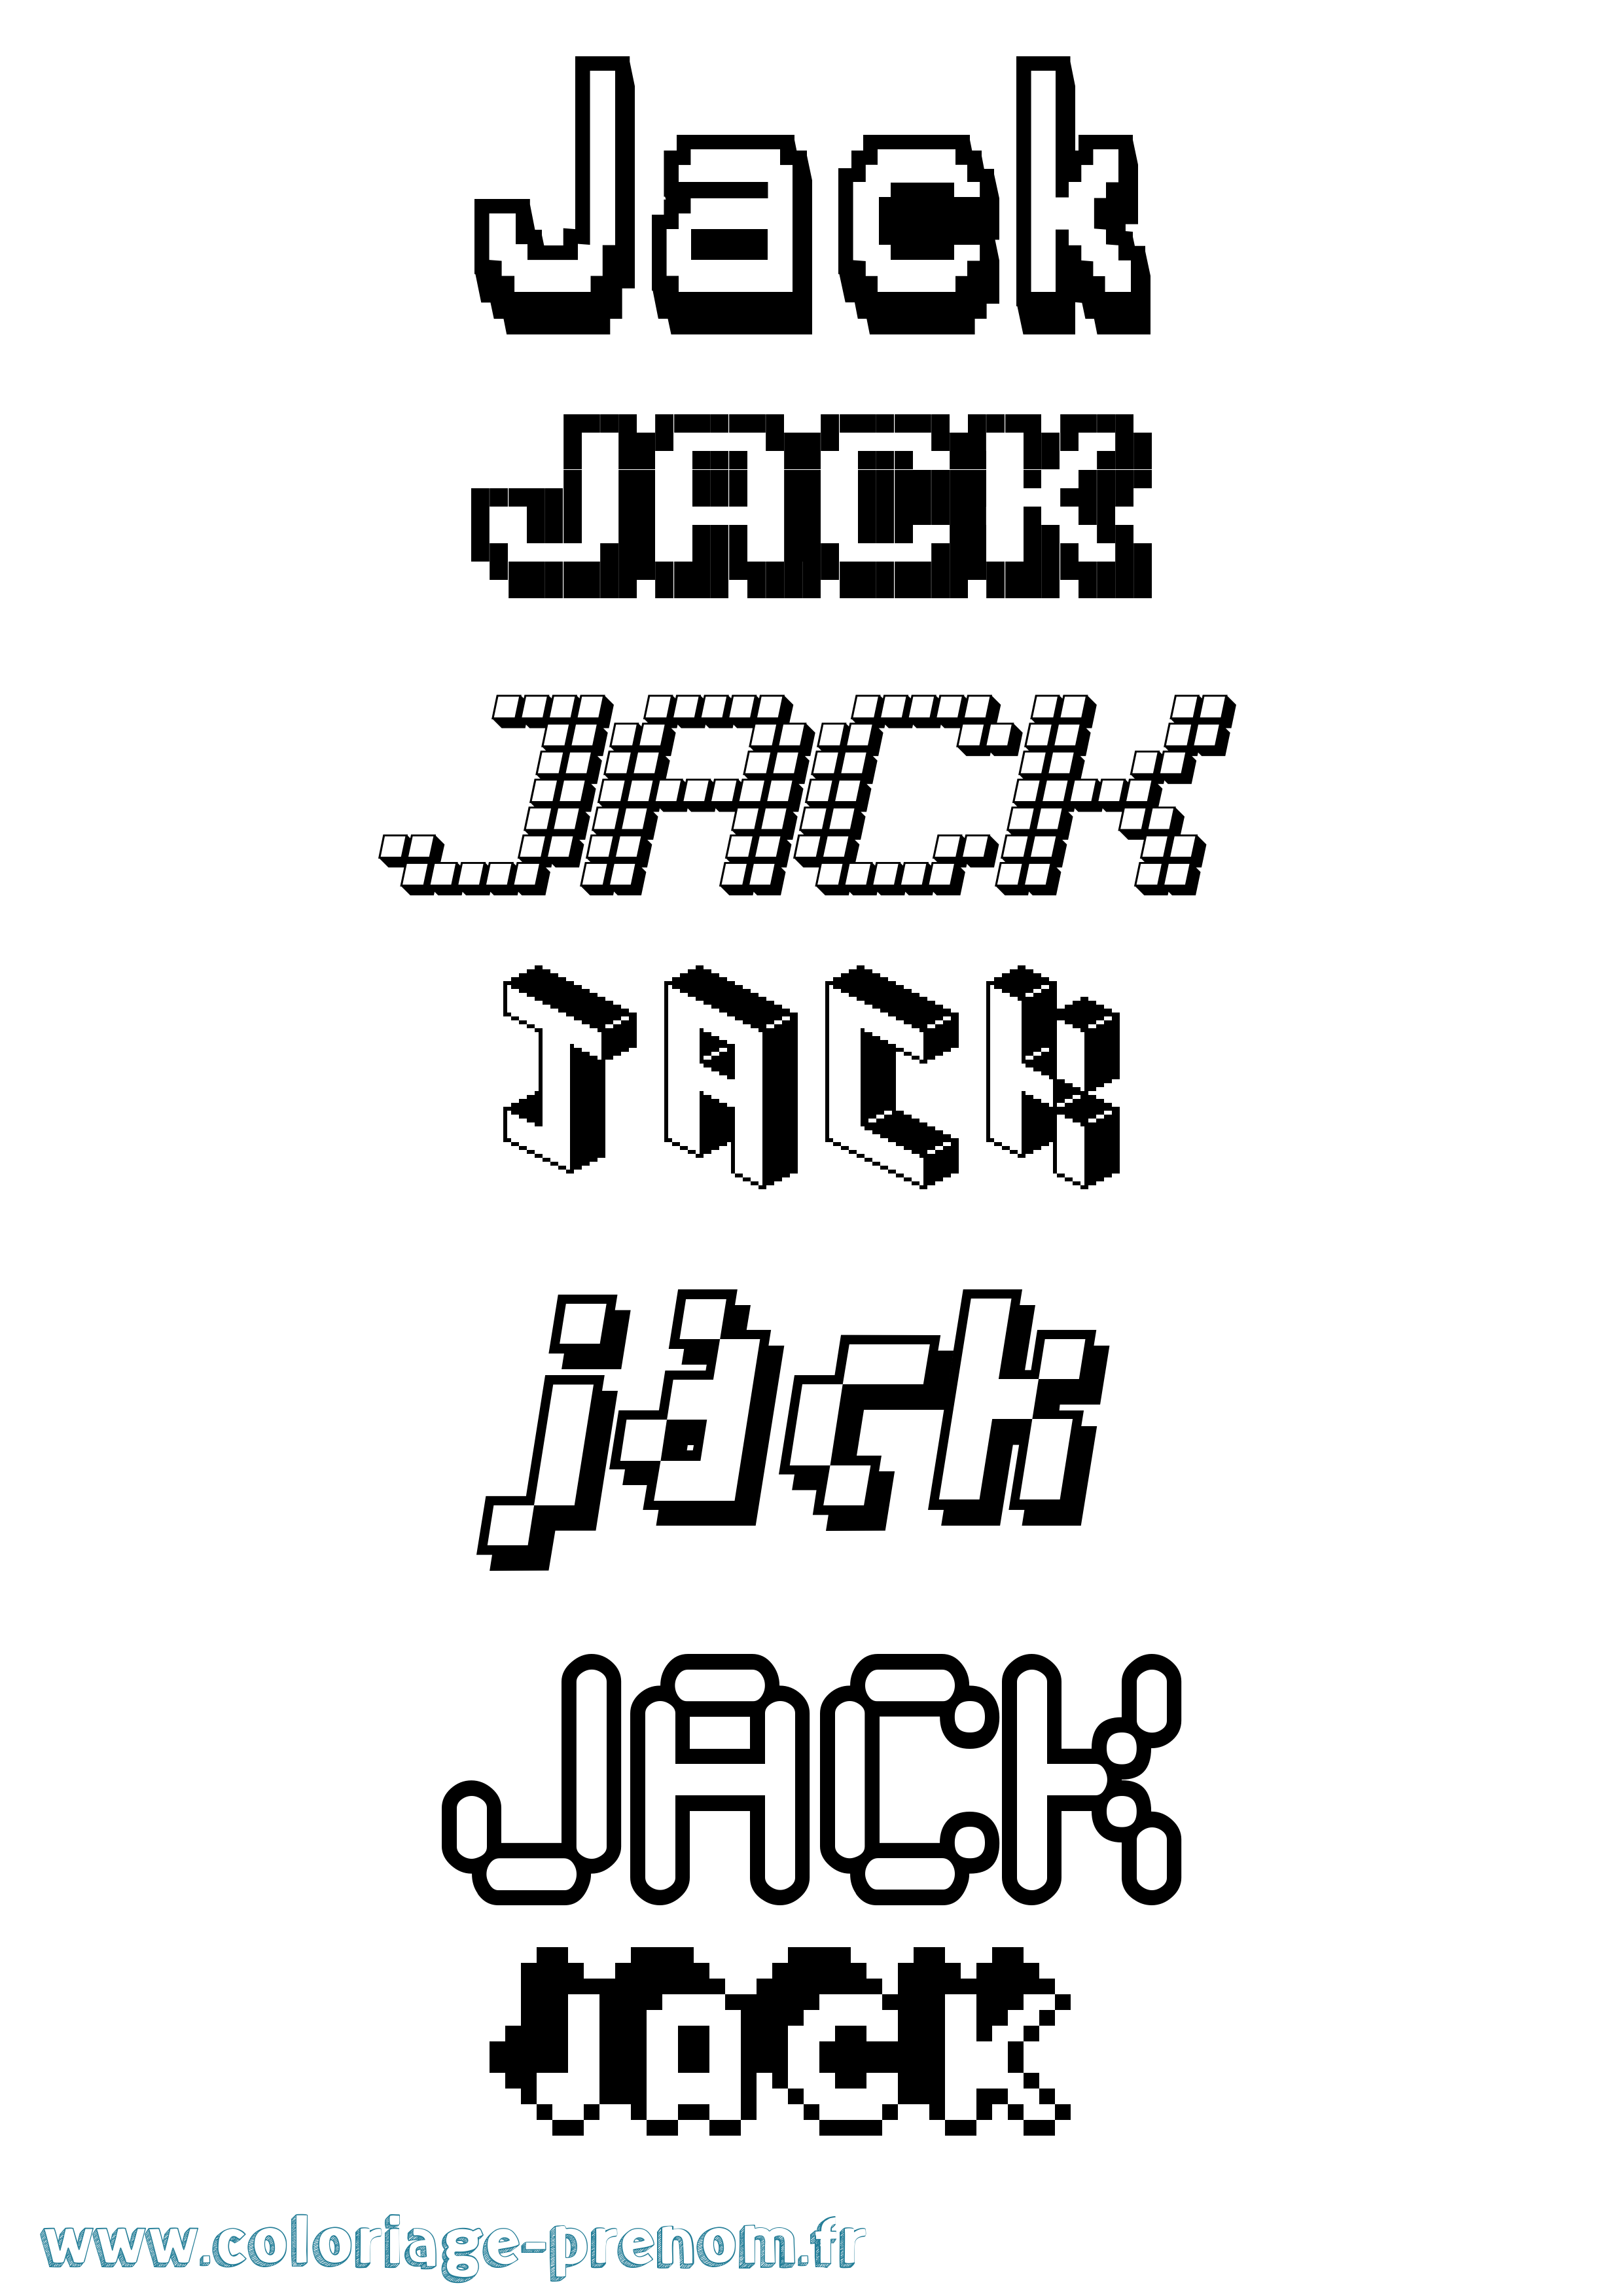 Coloriage prénom Jack Pixel